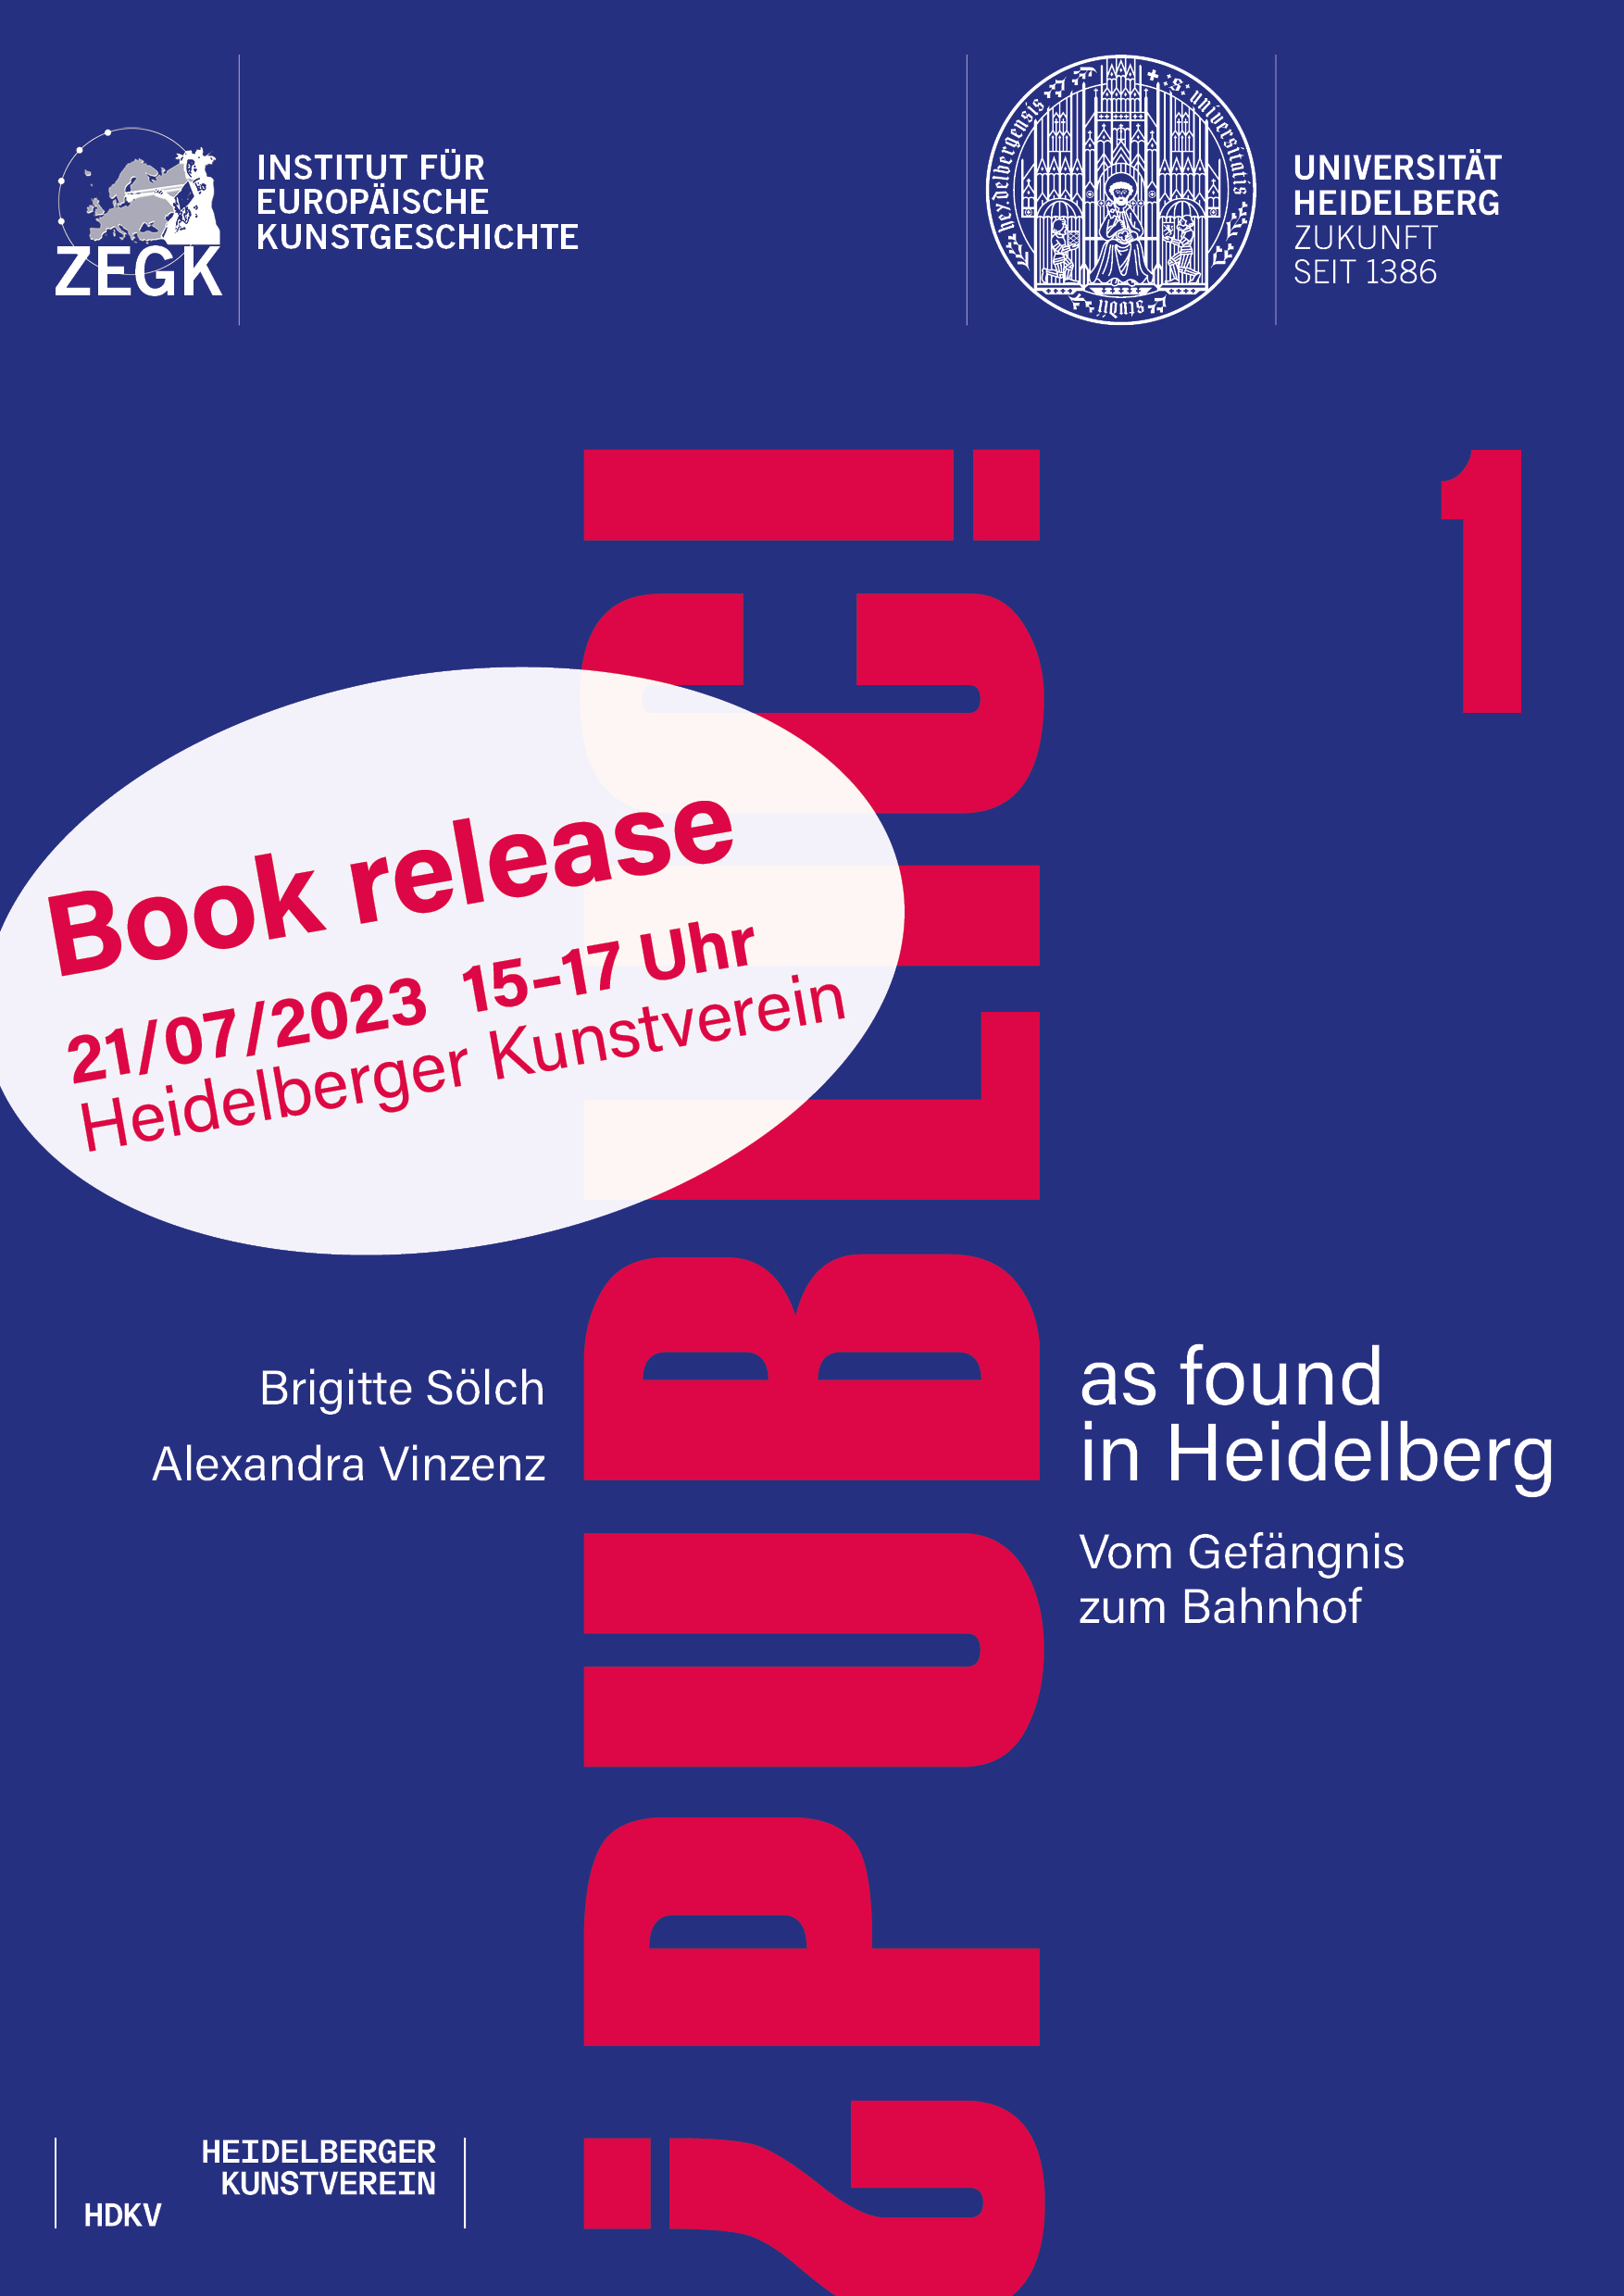 21/07/2023 | Book release: as found in Heidelberg